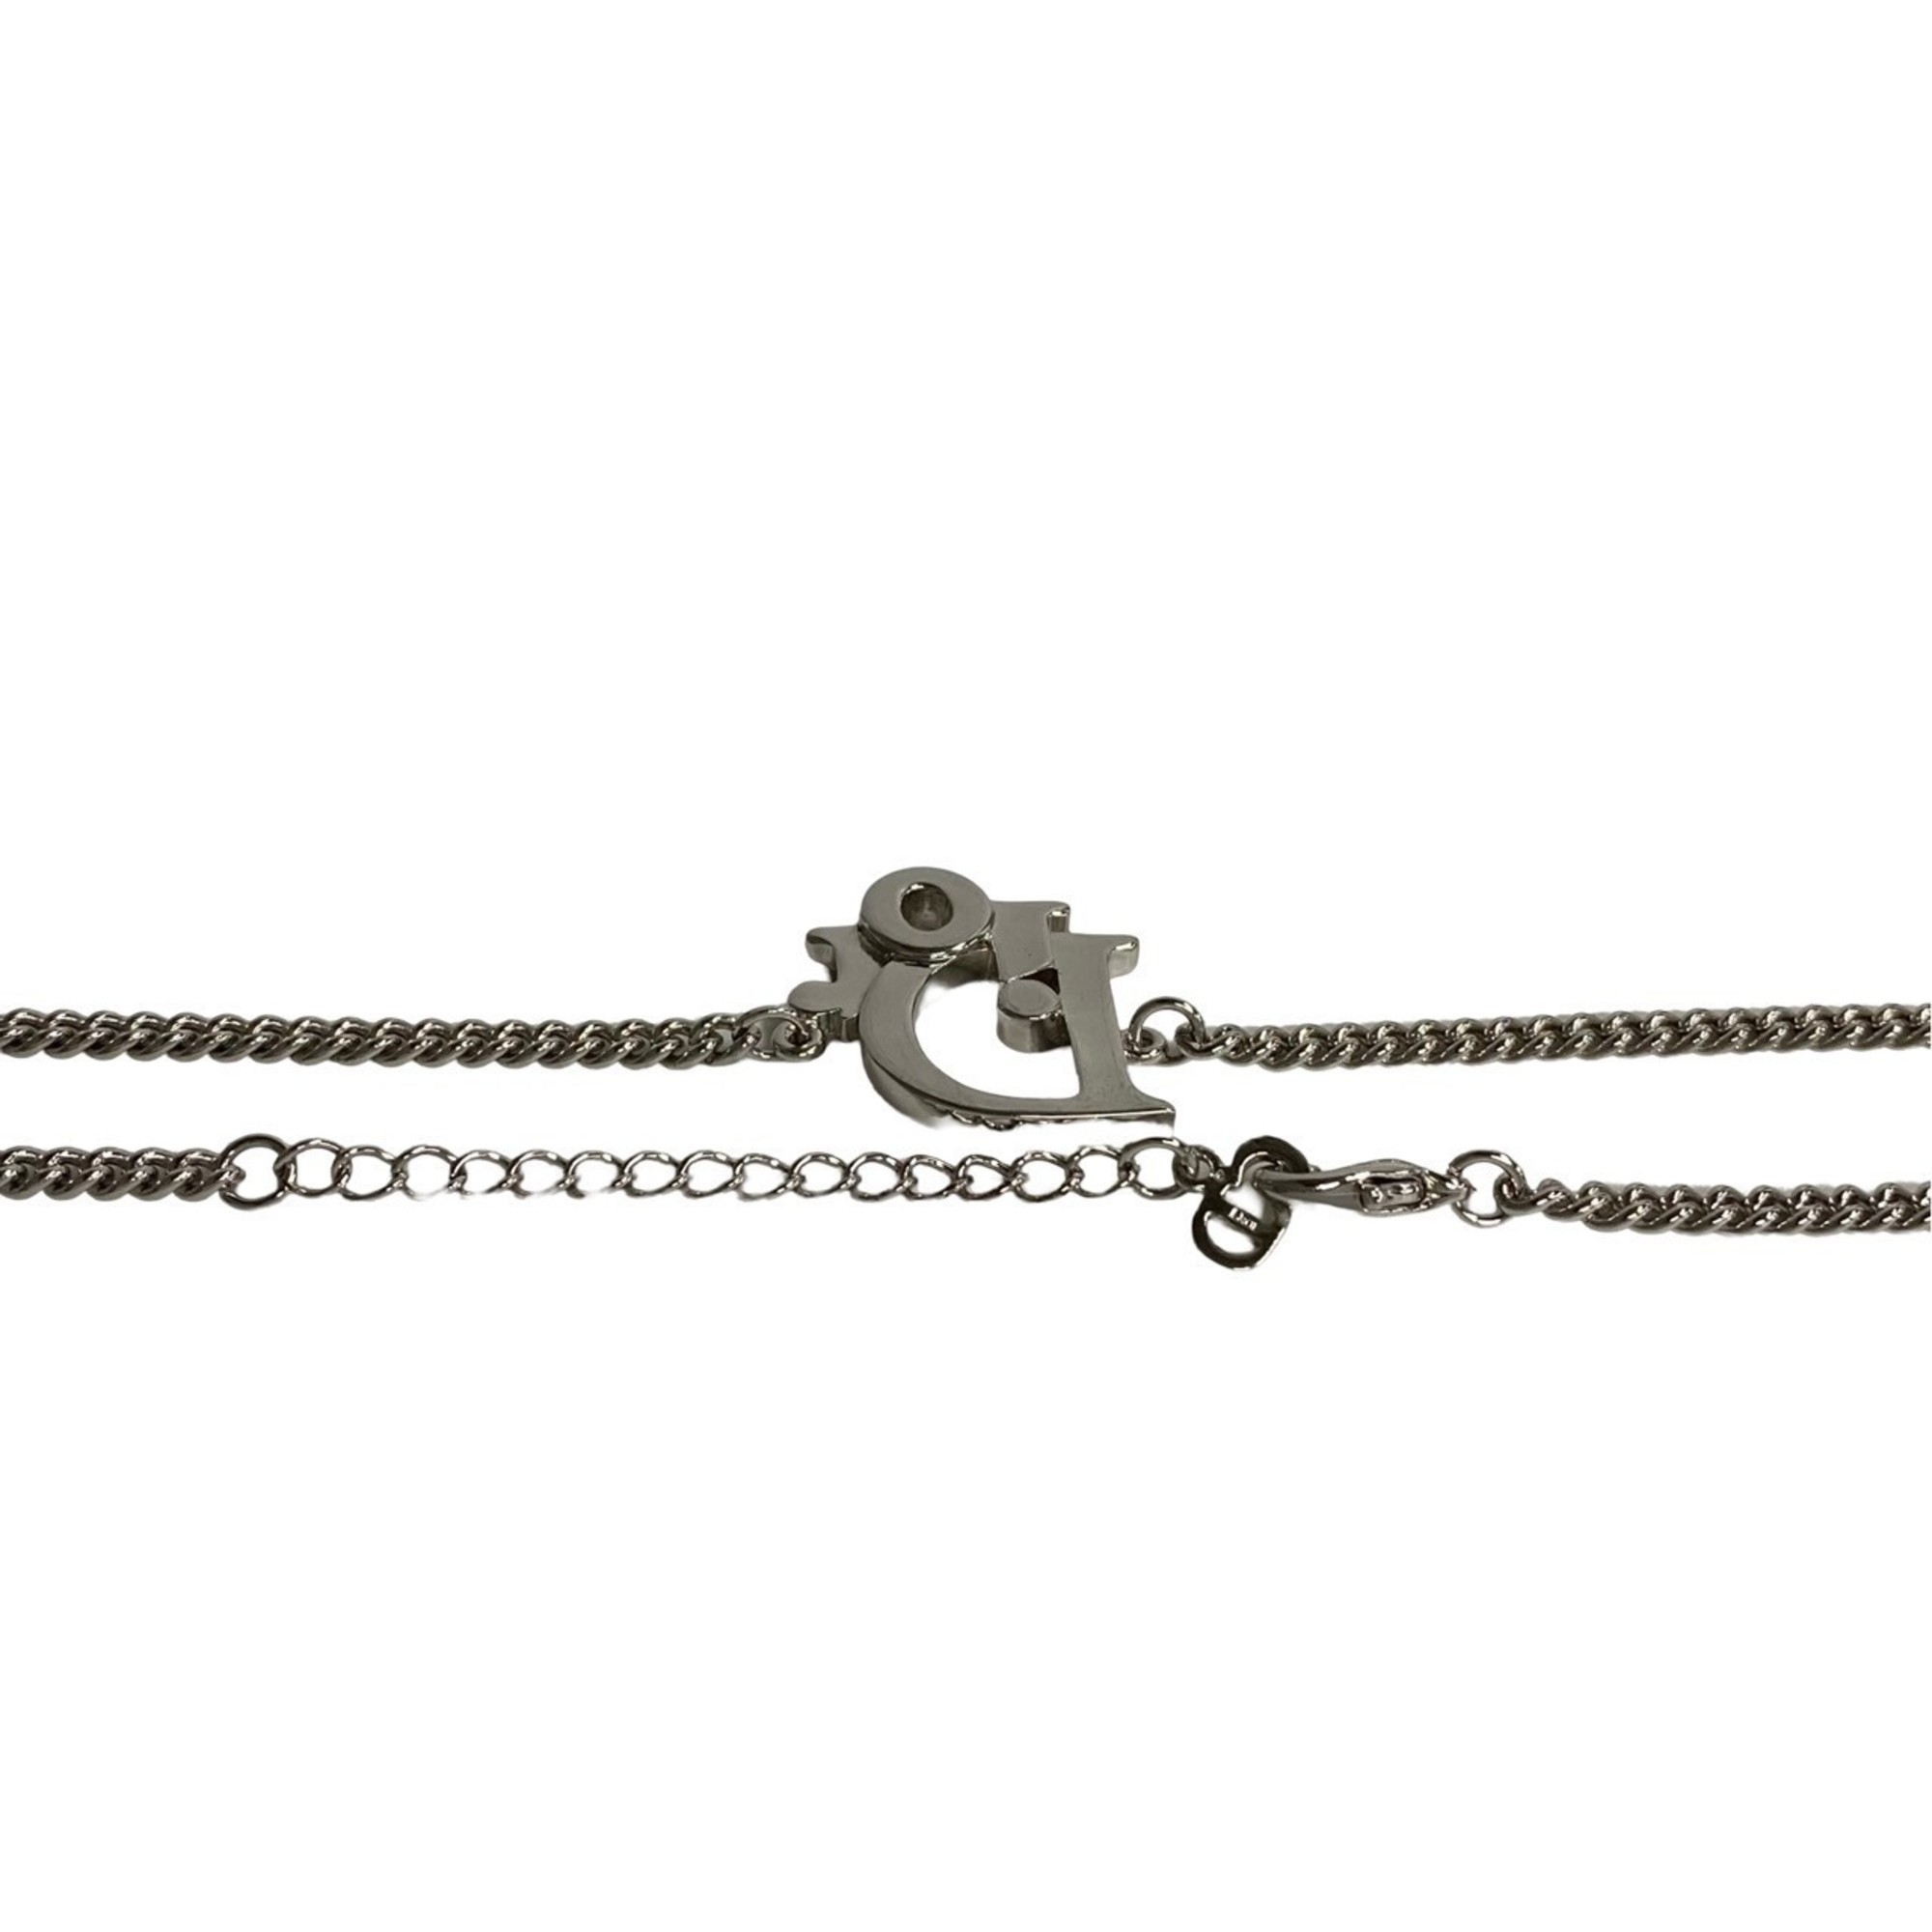 Christian Dior Chain Necklace Pendant Silver Women's Men's 72302